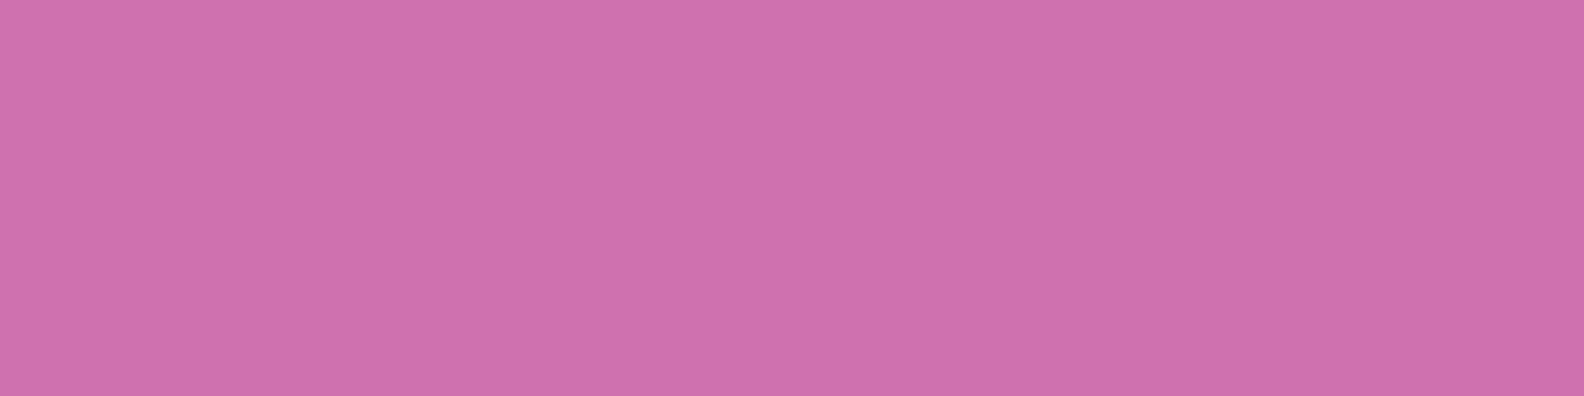 1584x396 Sky Magenta Solid Color Background